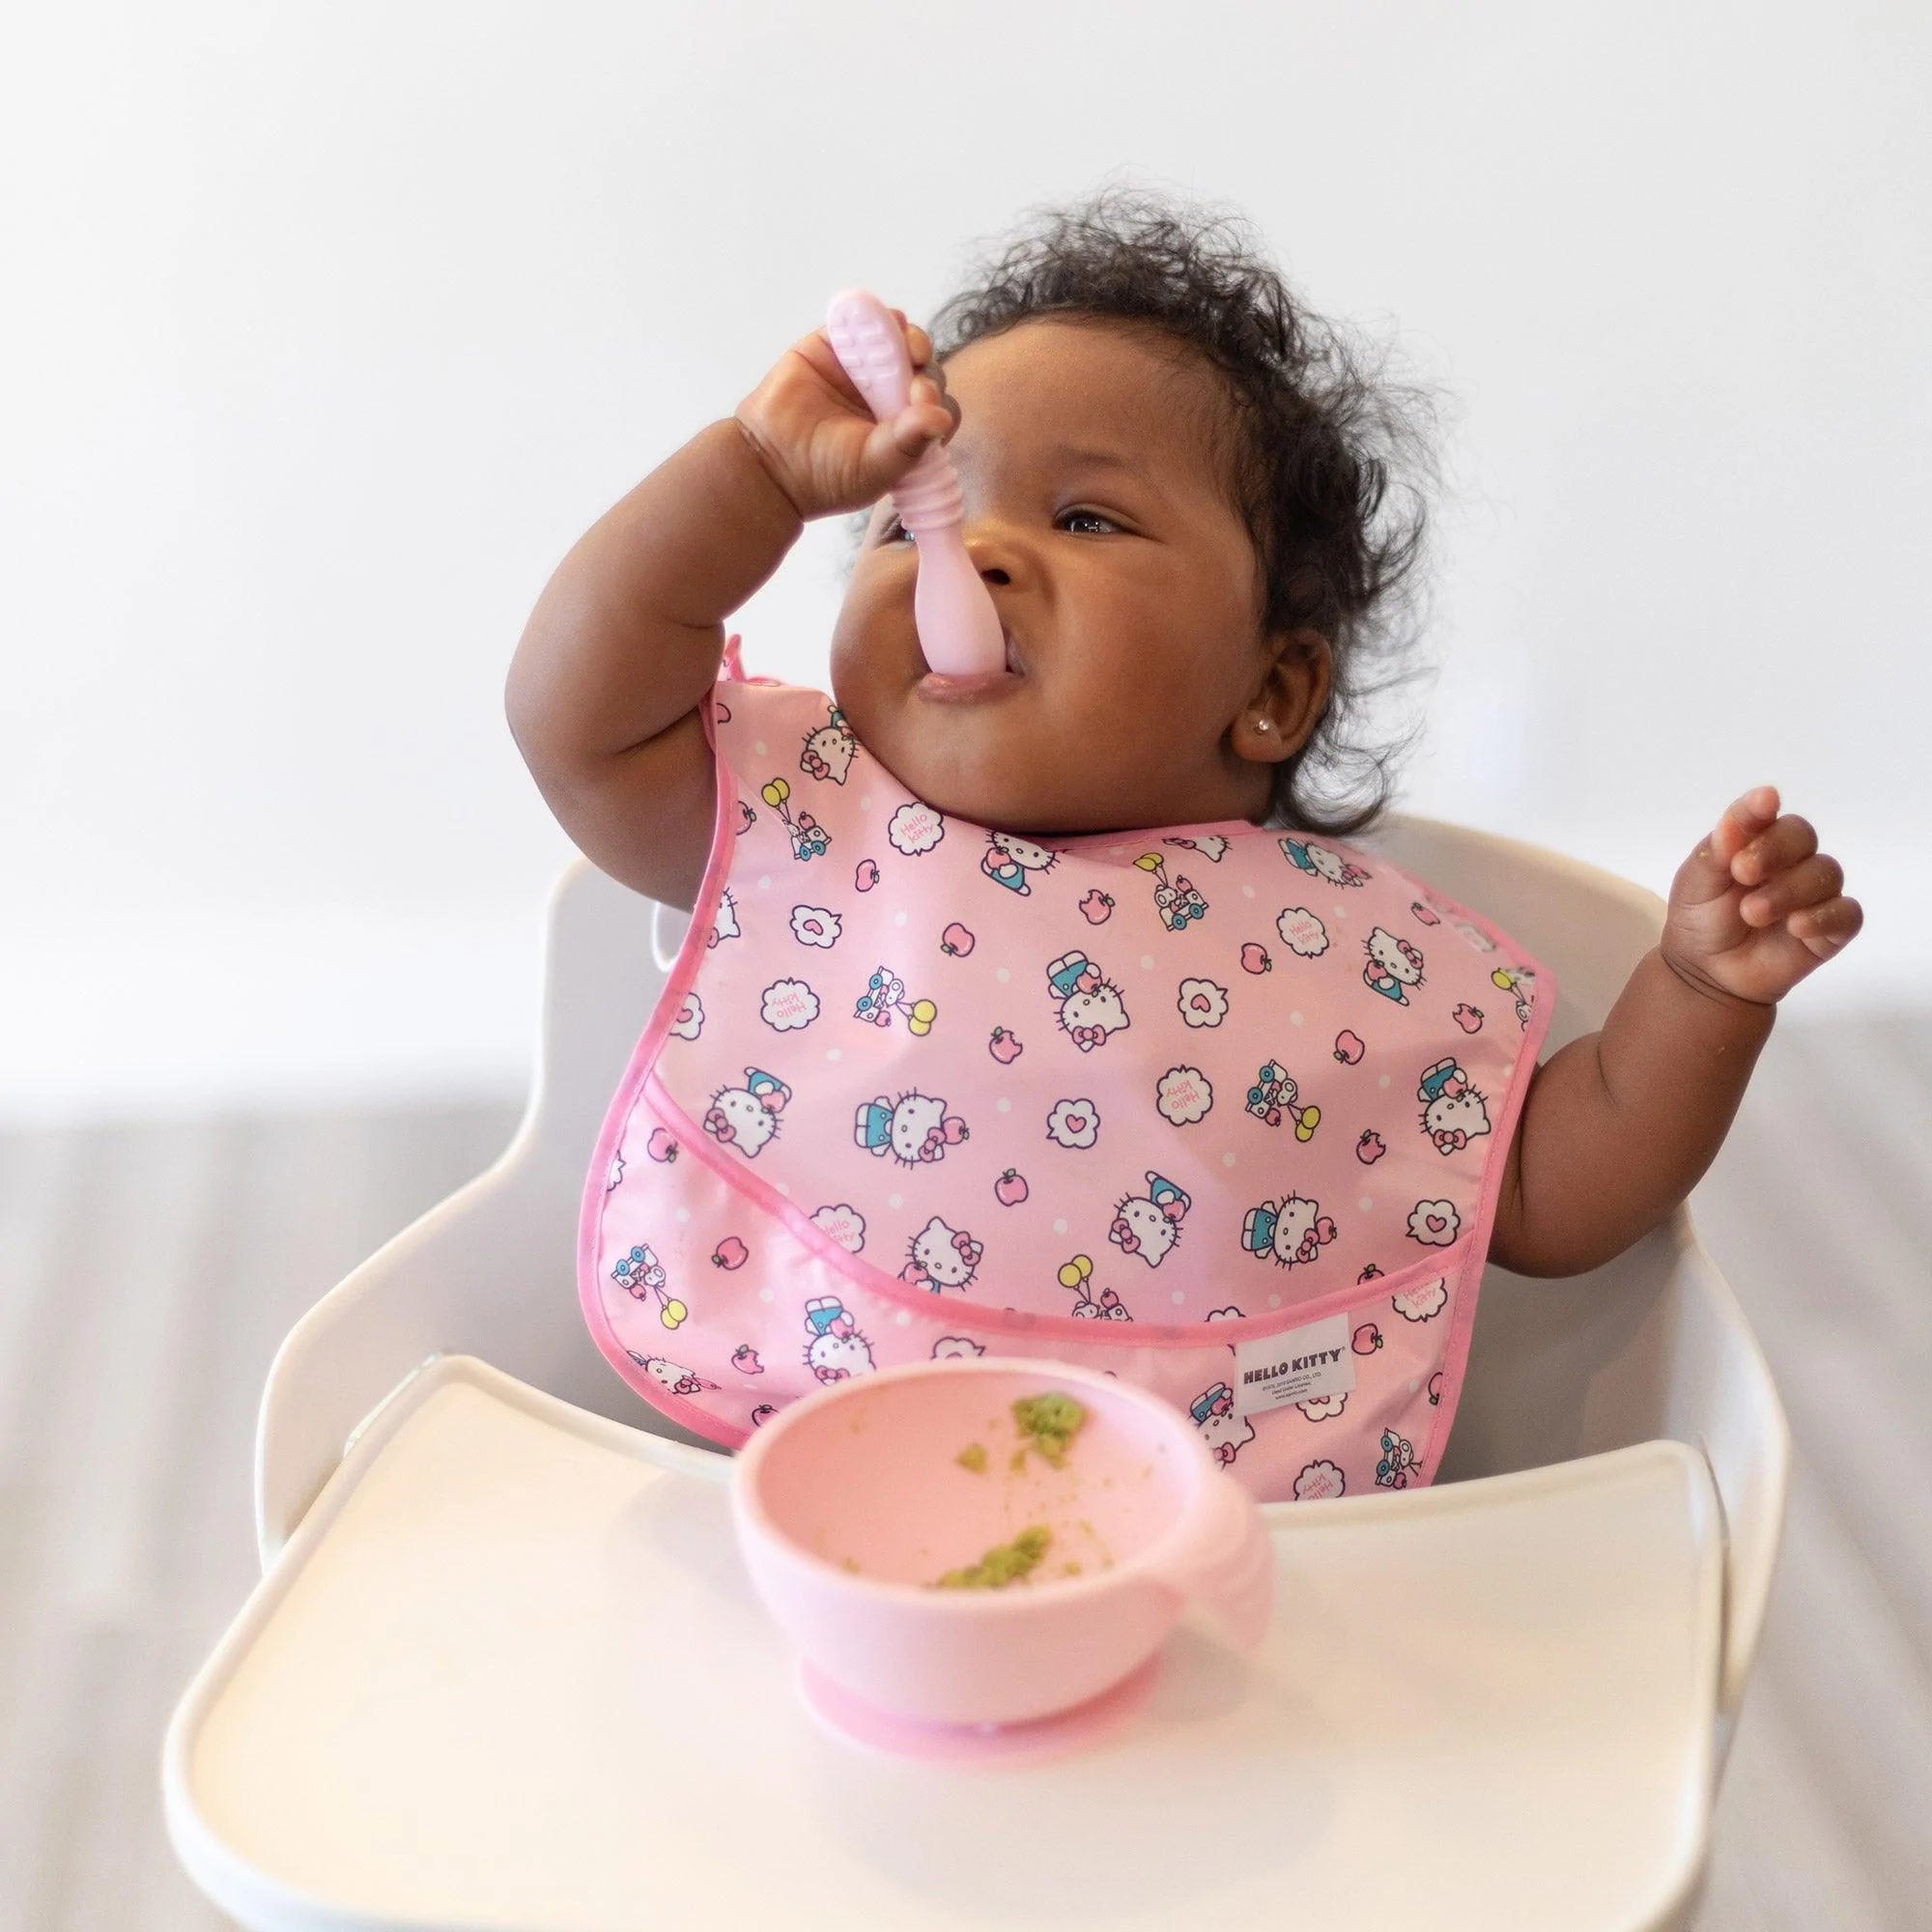 Bumkins Silicone First Feeding Baby Bowl Set - Sand - Size